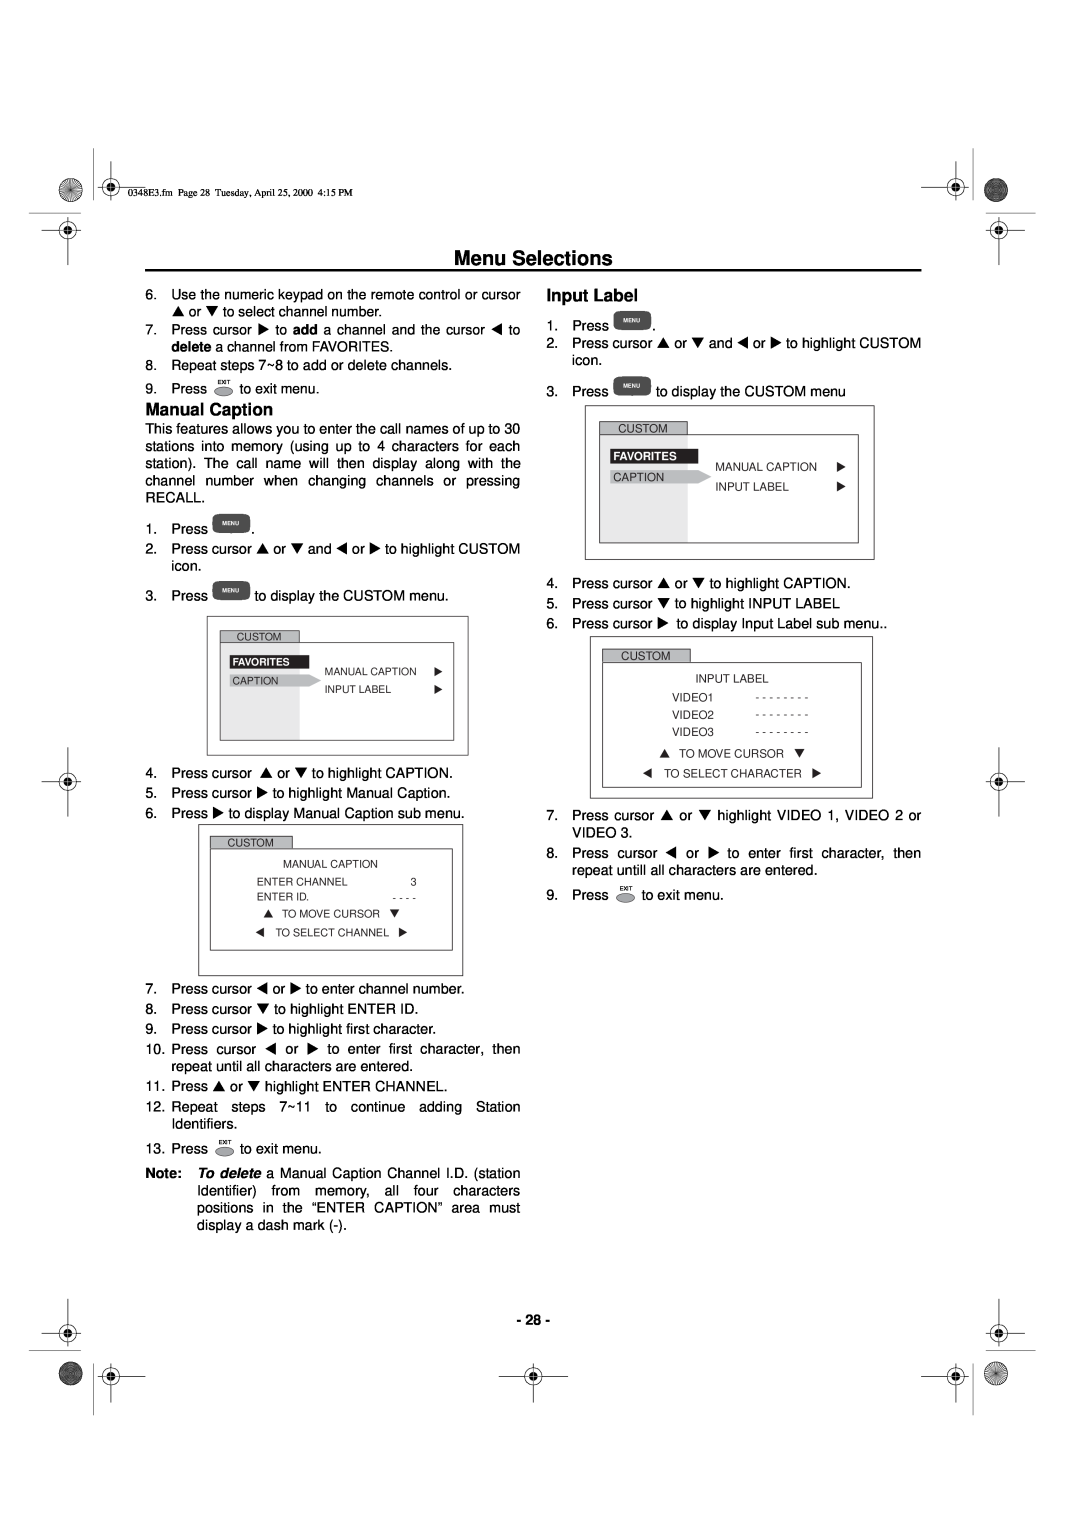 Hitachi 27UX01B manual Manual Caption, Input Label, Press 